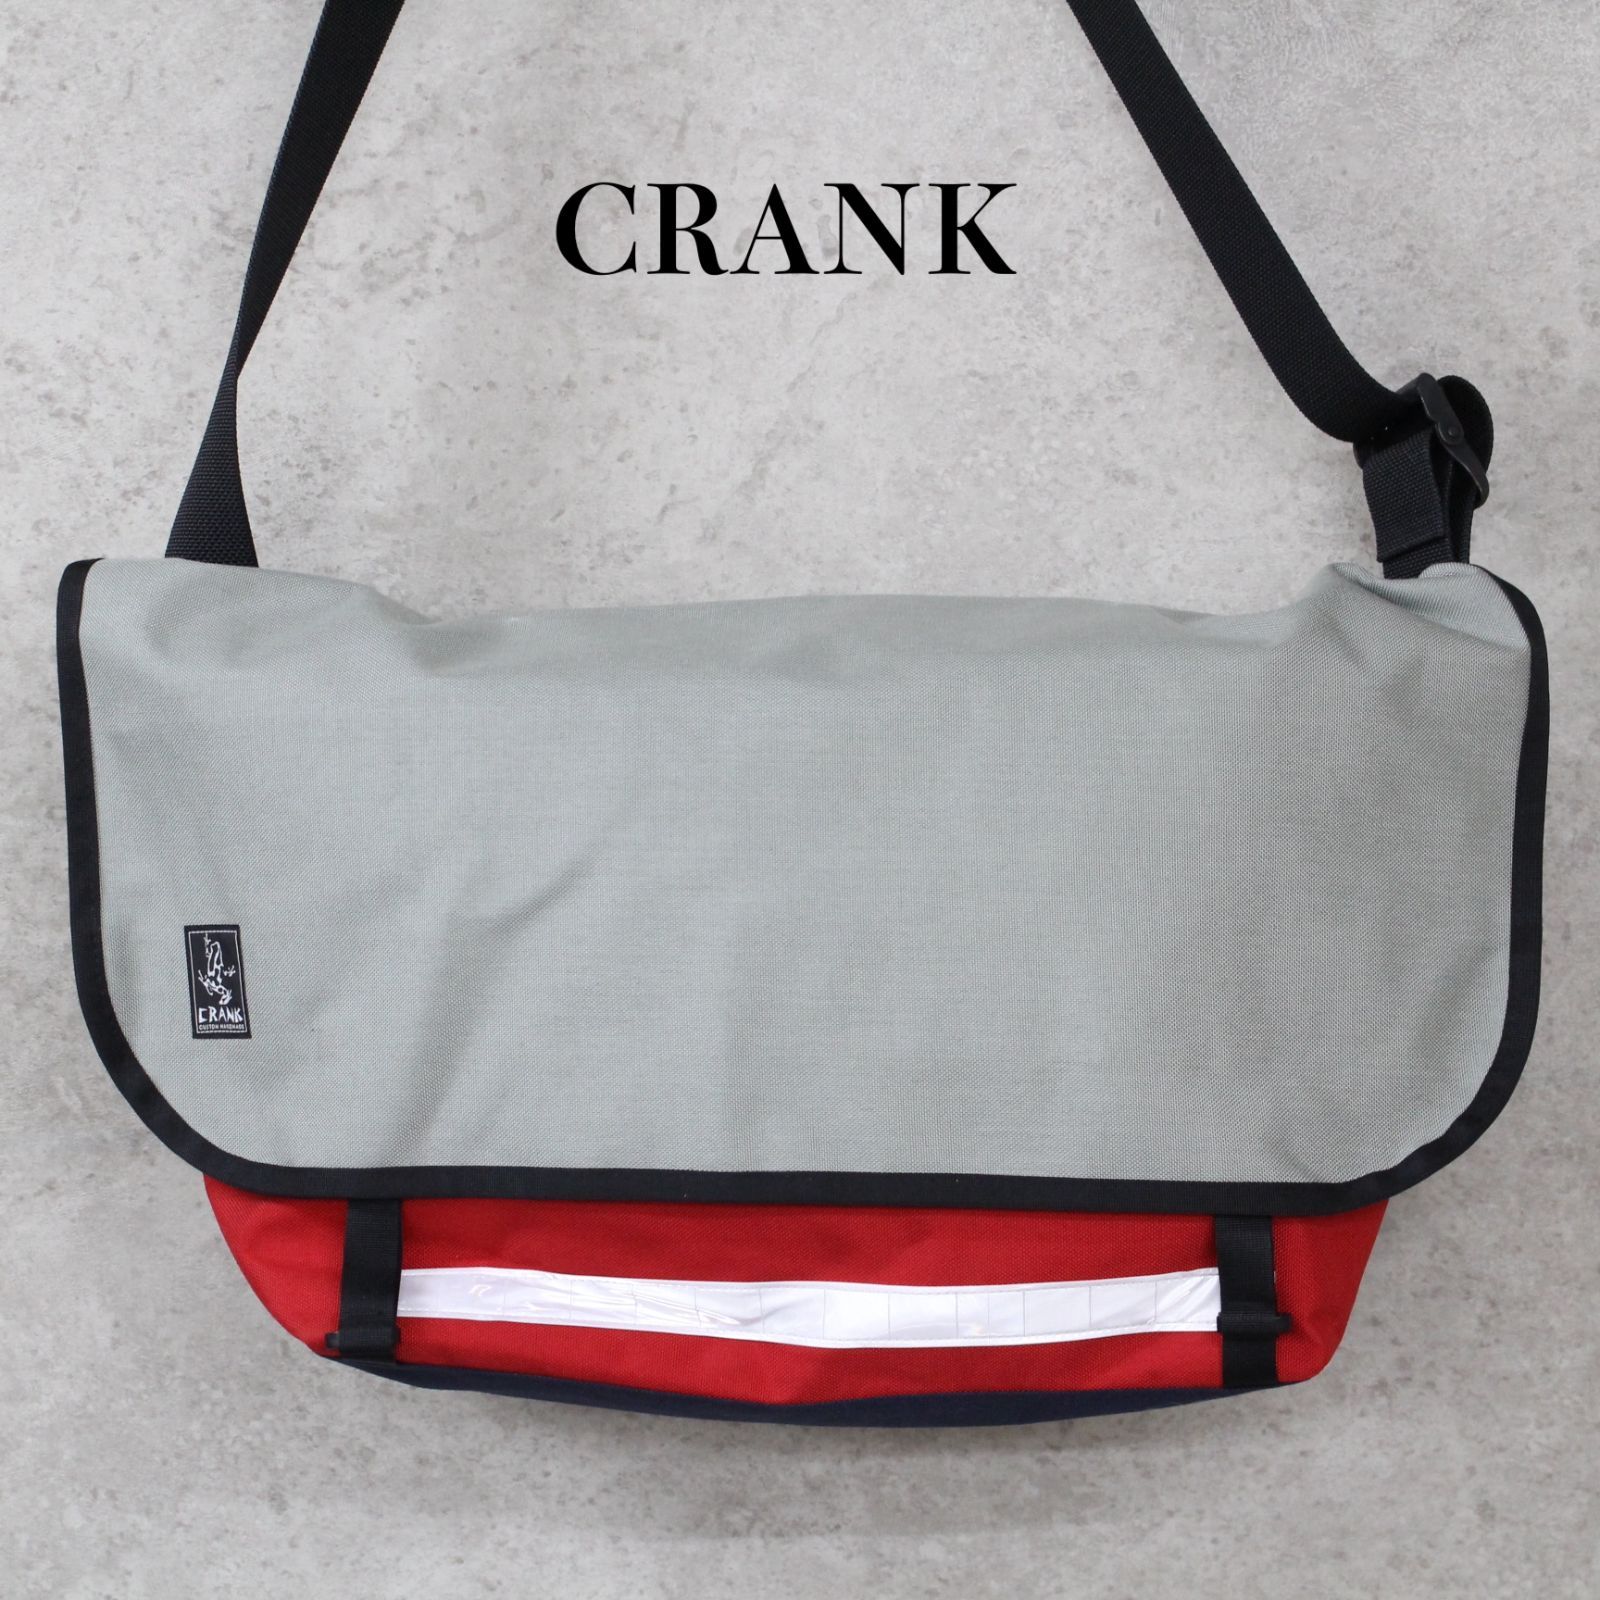 S888)CRANK メッセンジャーバッグ カスタムバッグ クランク メンズ 